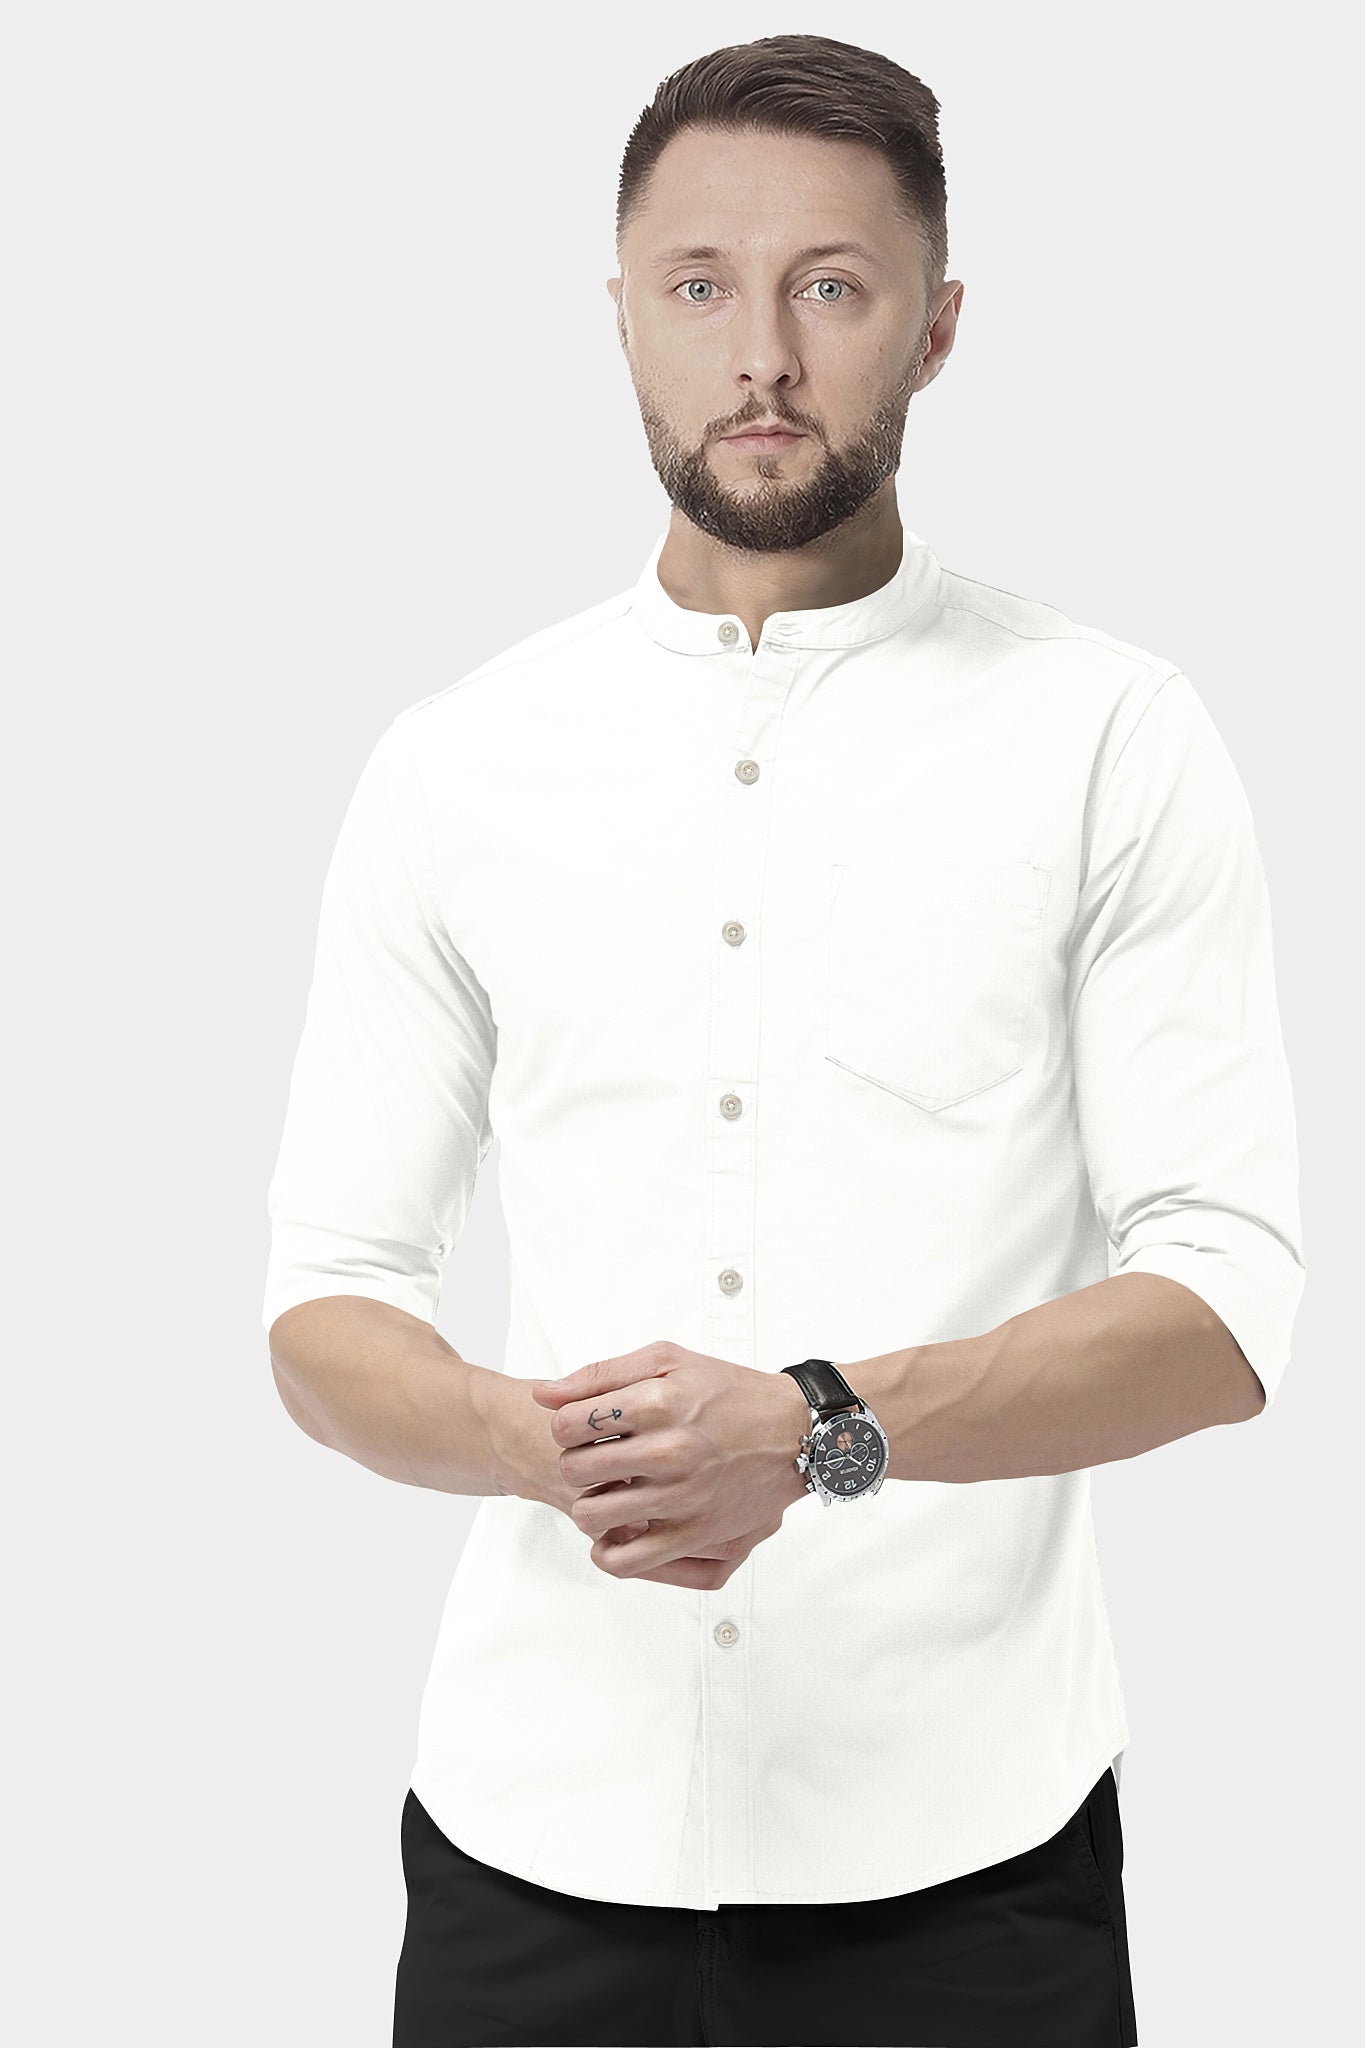 3.0] White Shirt Collar's Code & Price - RblxTrade